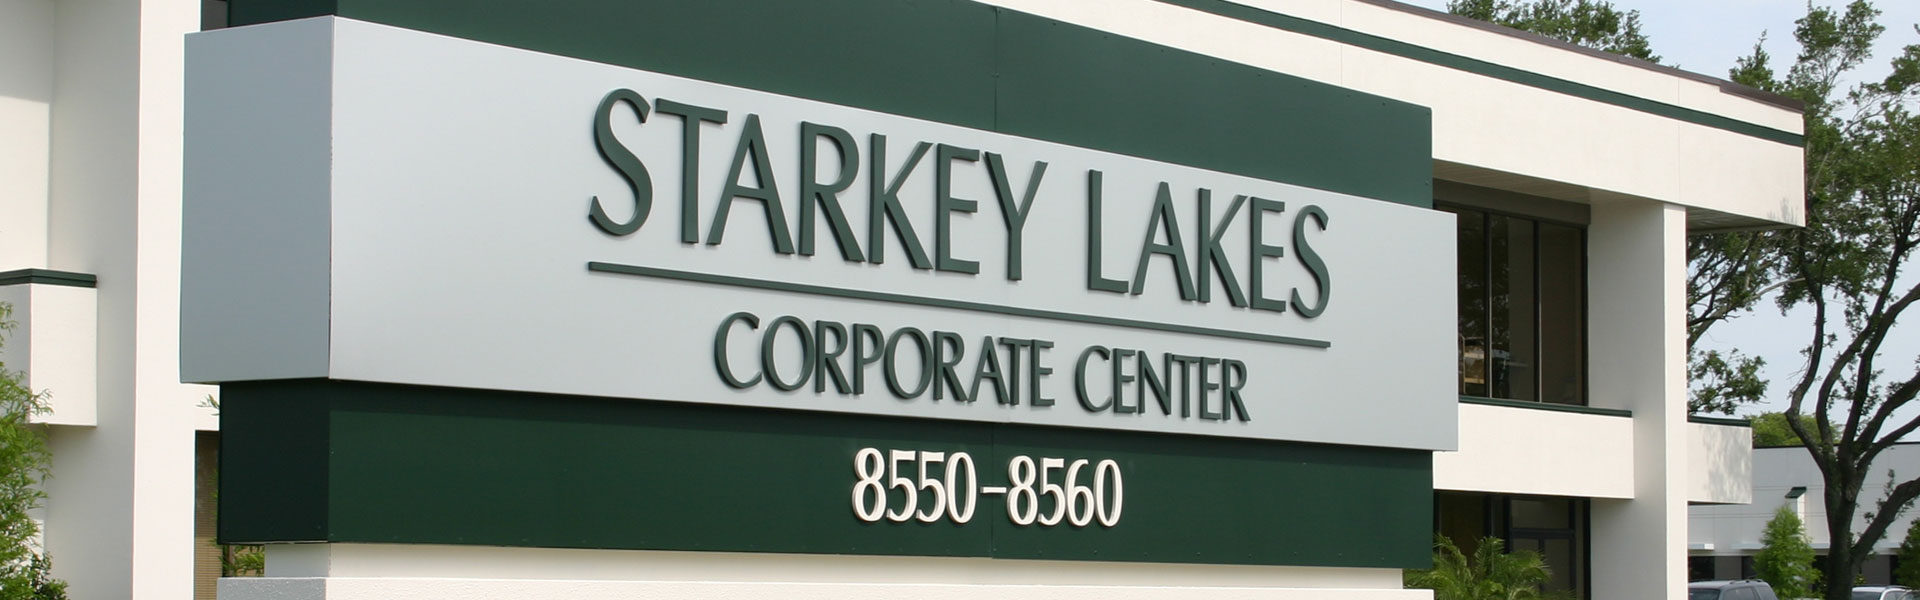 Starkey Lakes Corporate Center : Harrod Properties,